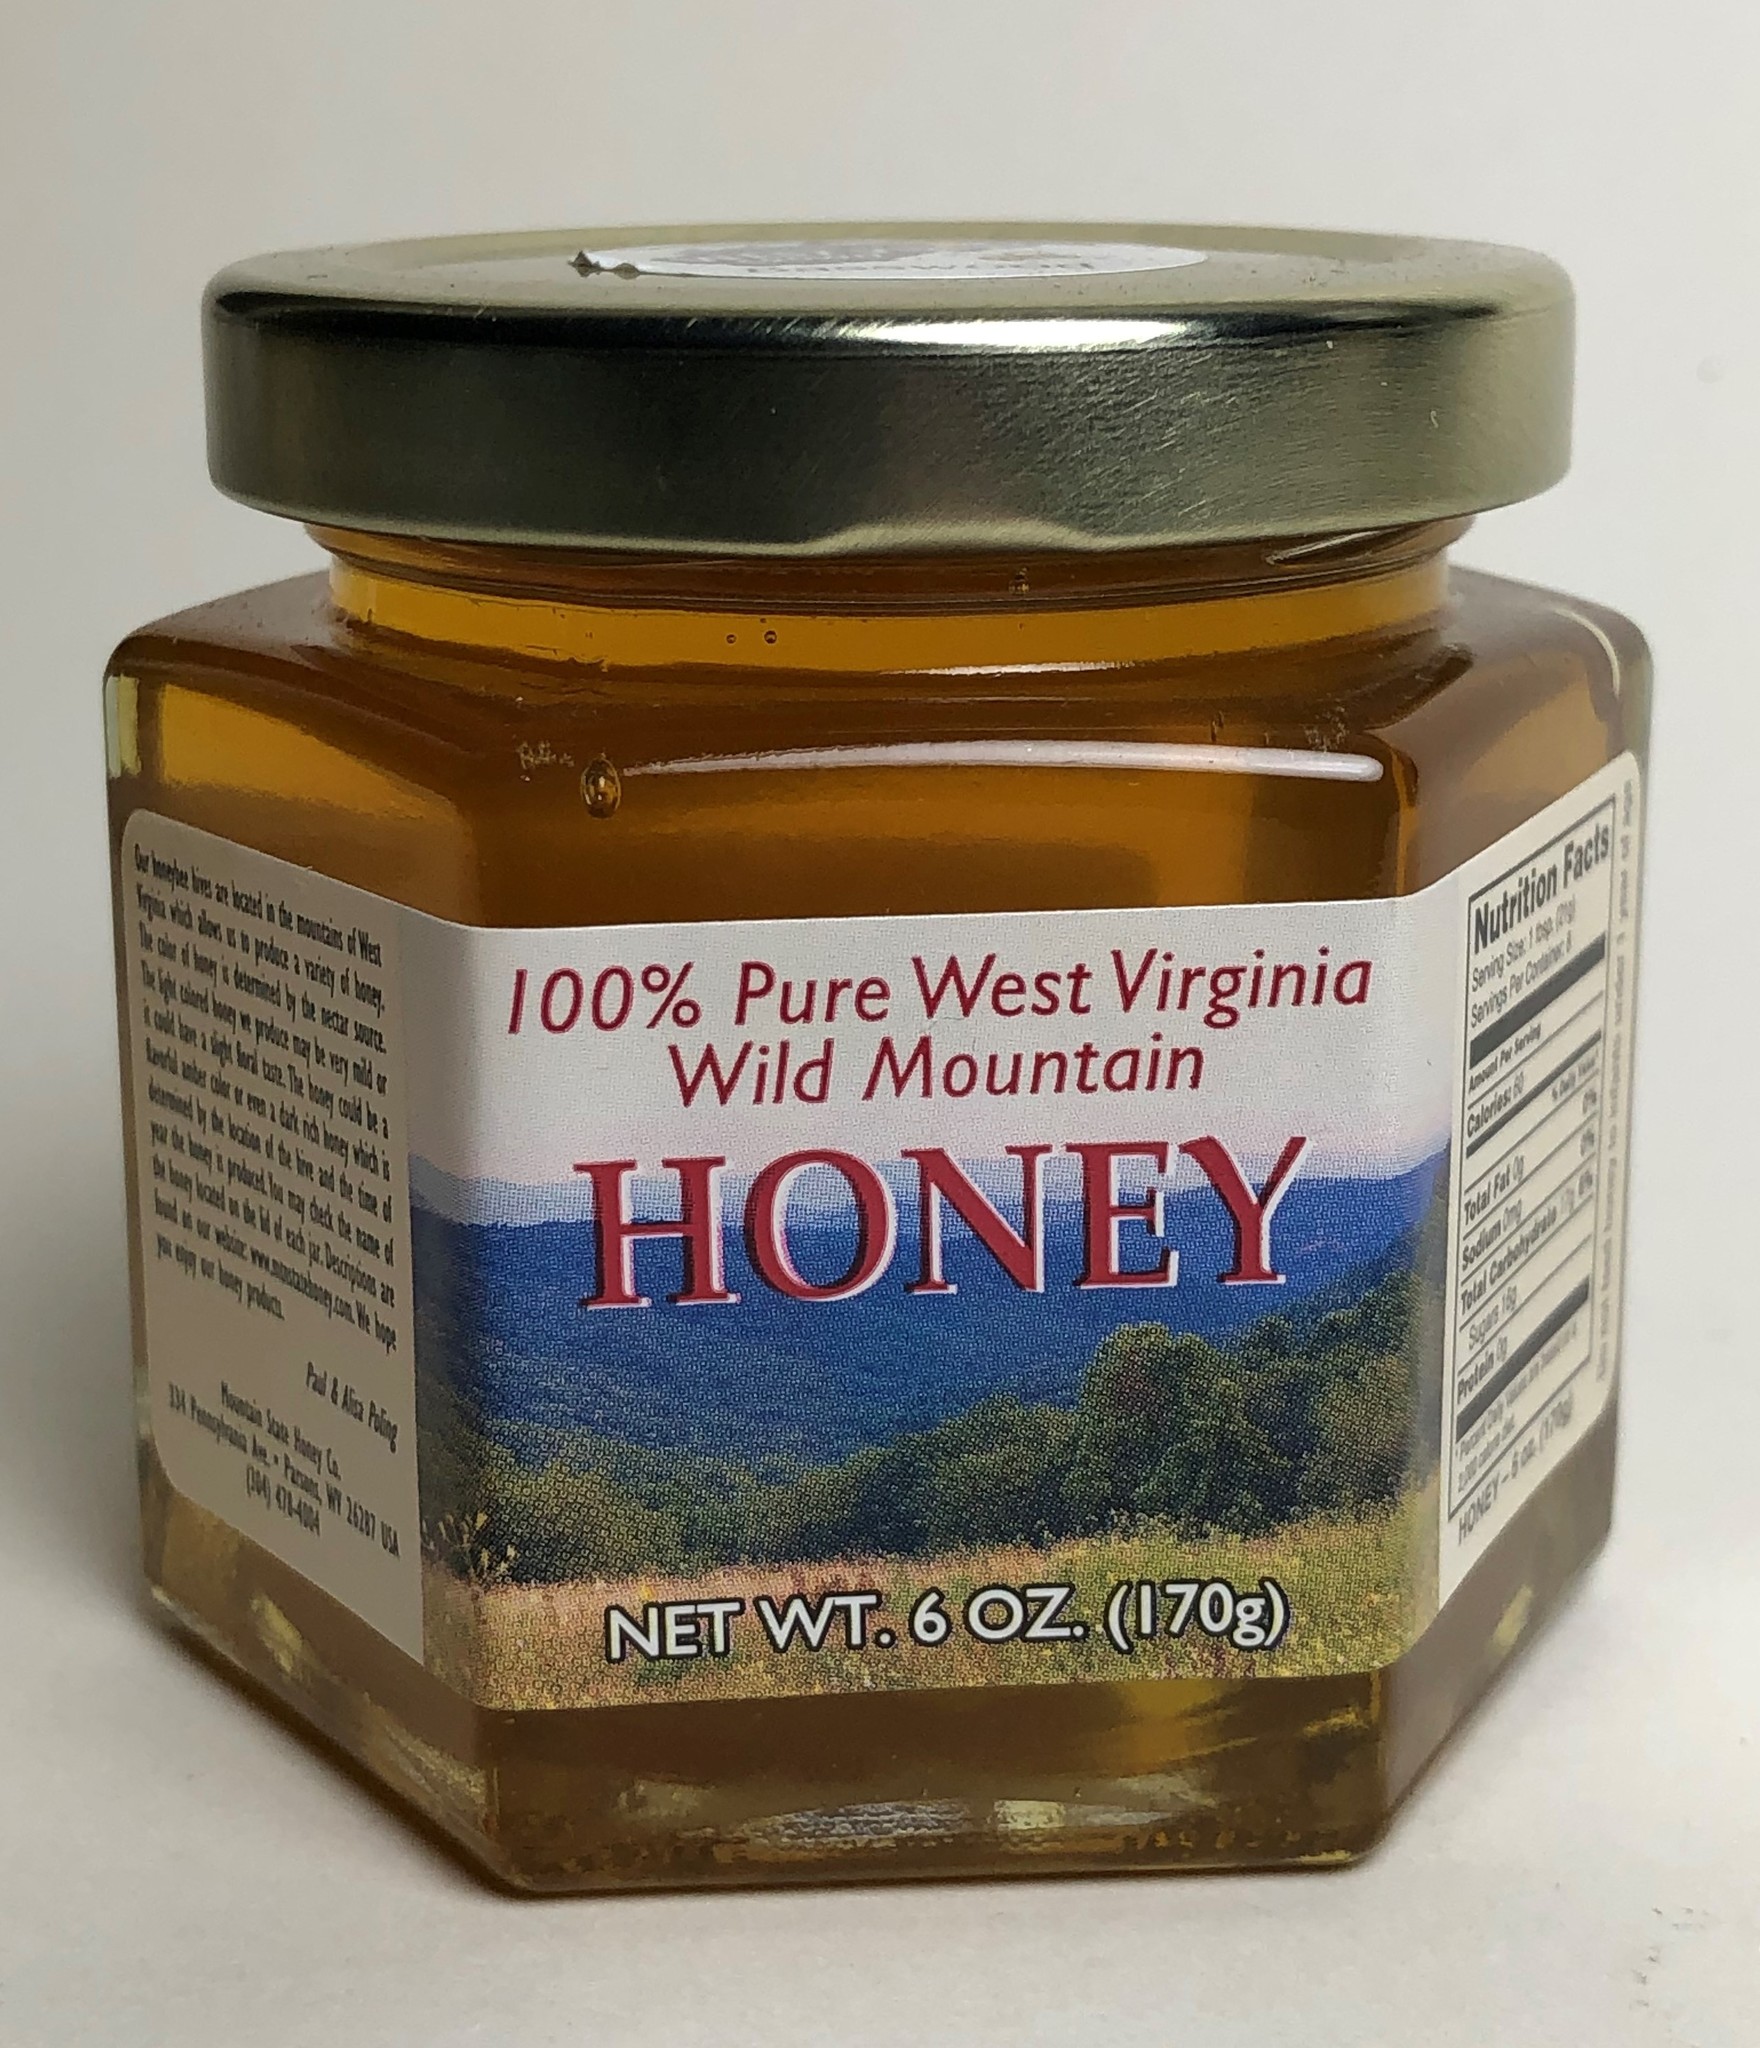 Mountain State Honey Company Mtn State Honey 6 oz. Basswood Hex Jar